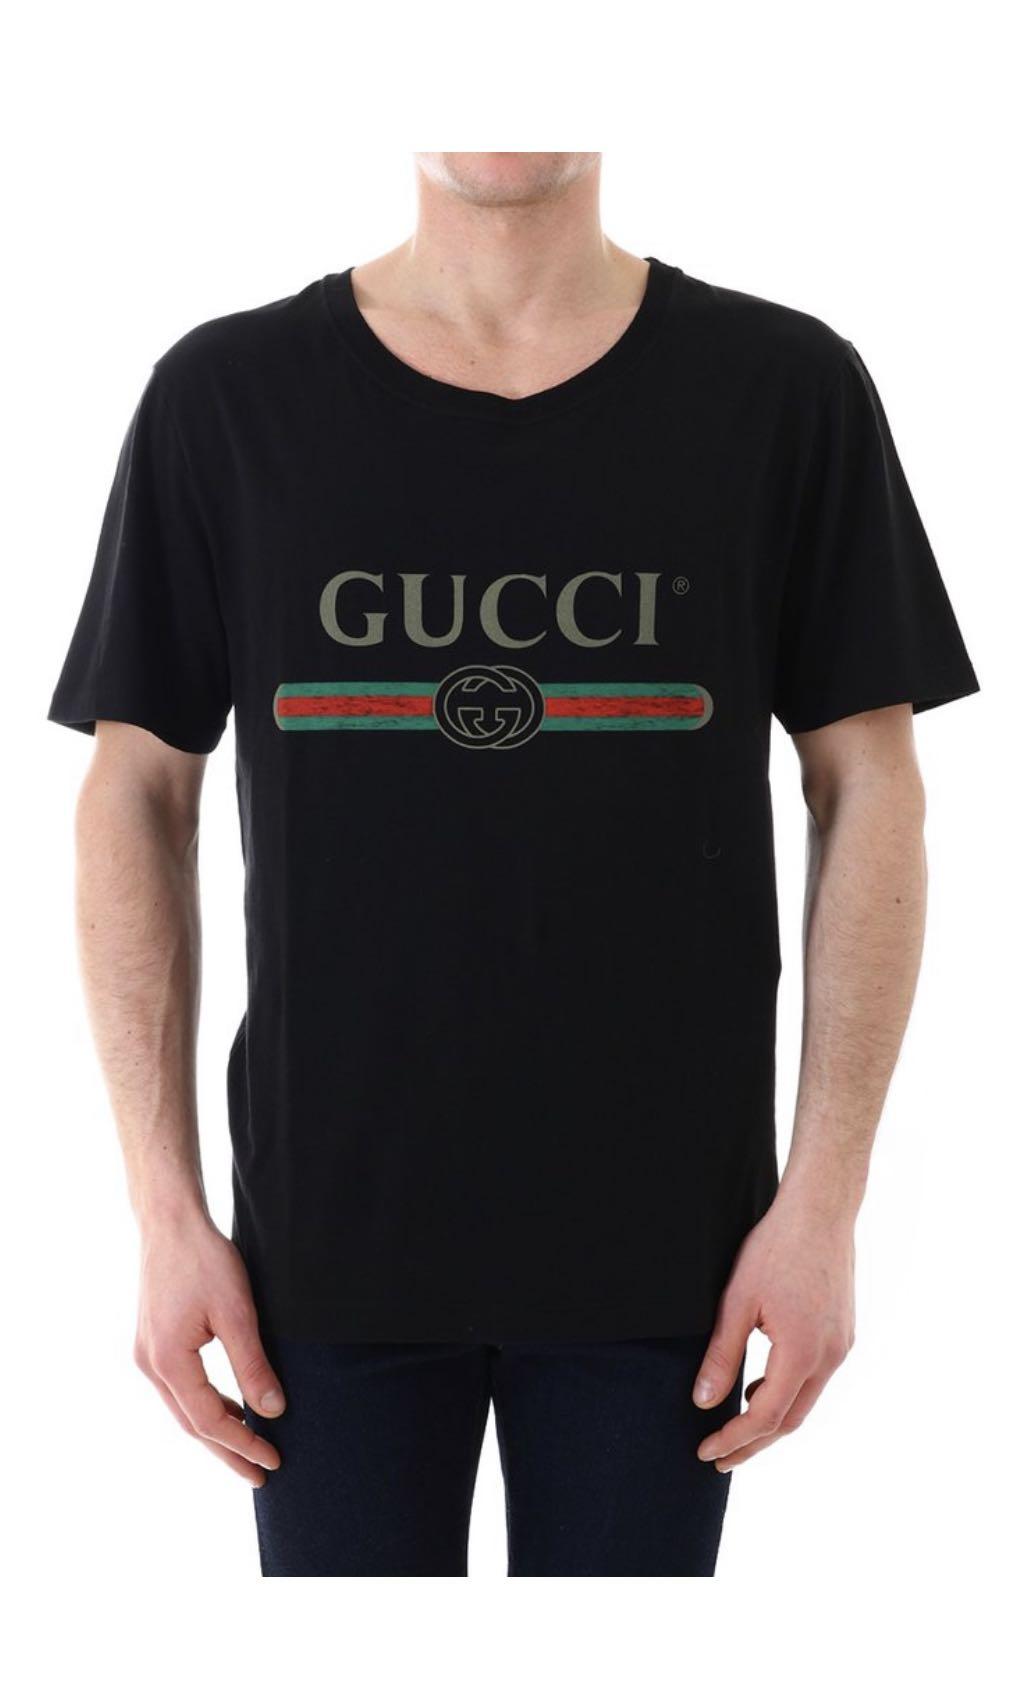 real gucci shirts for cheap